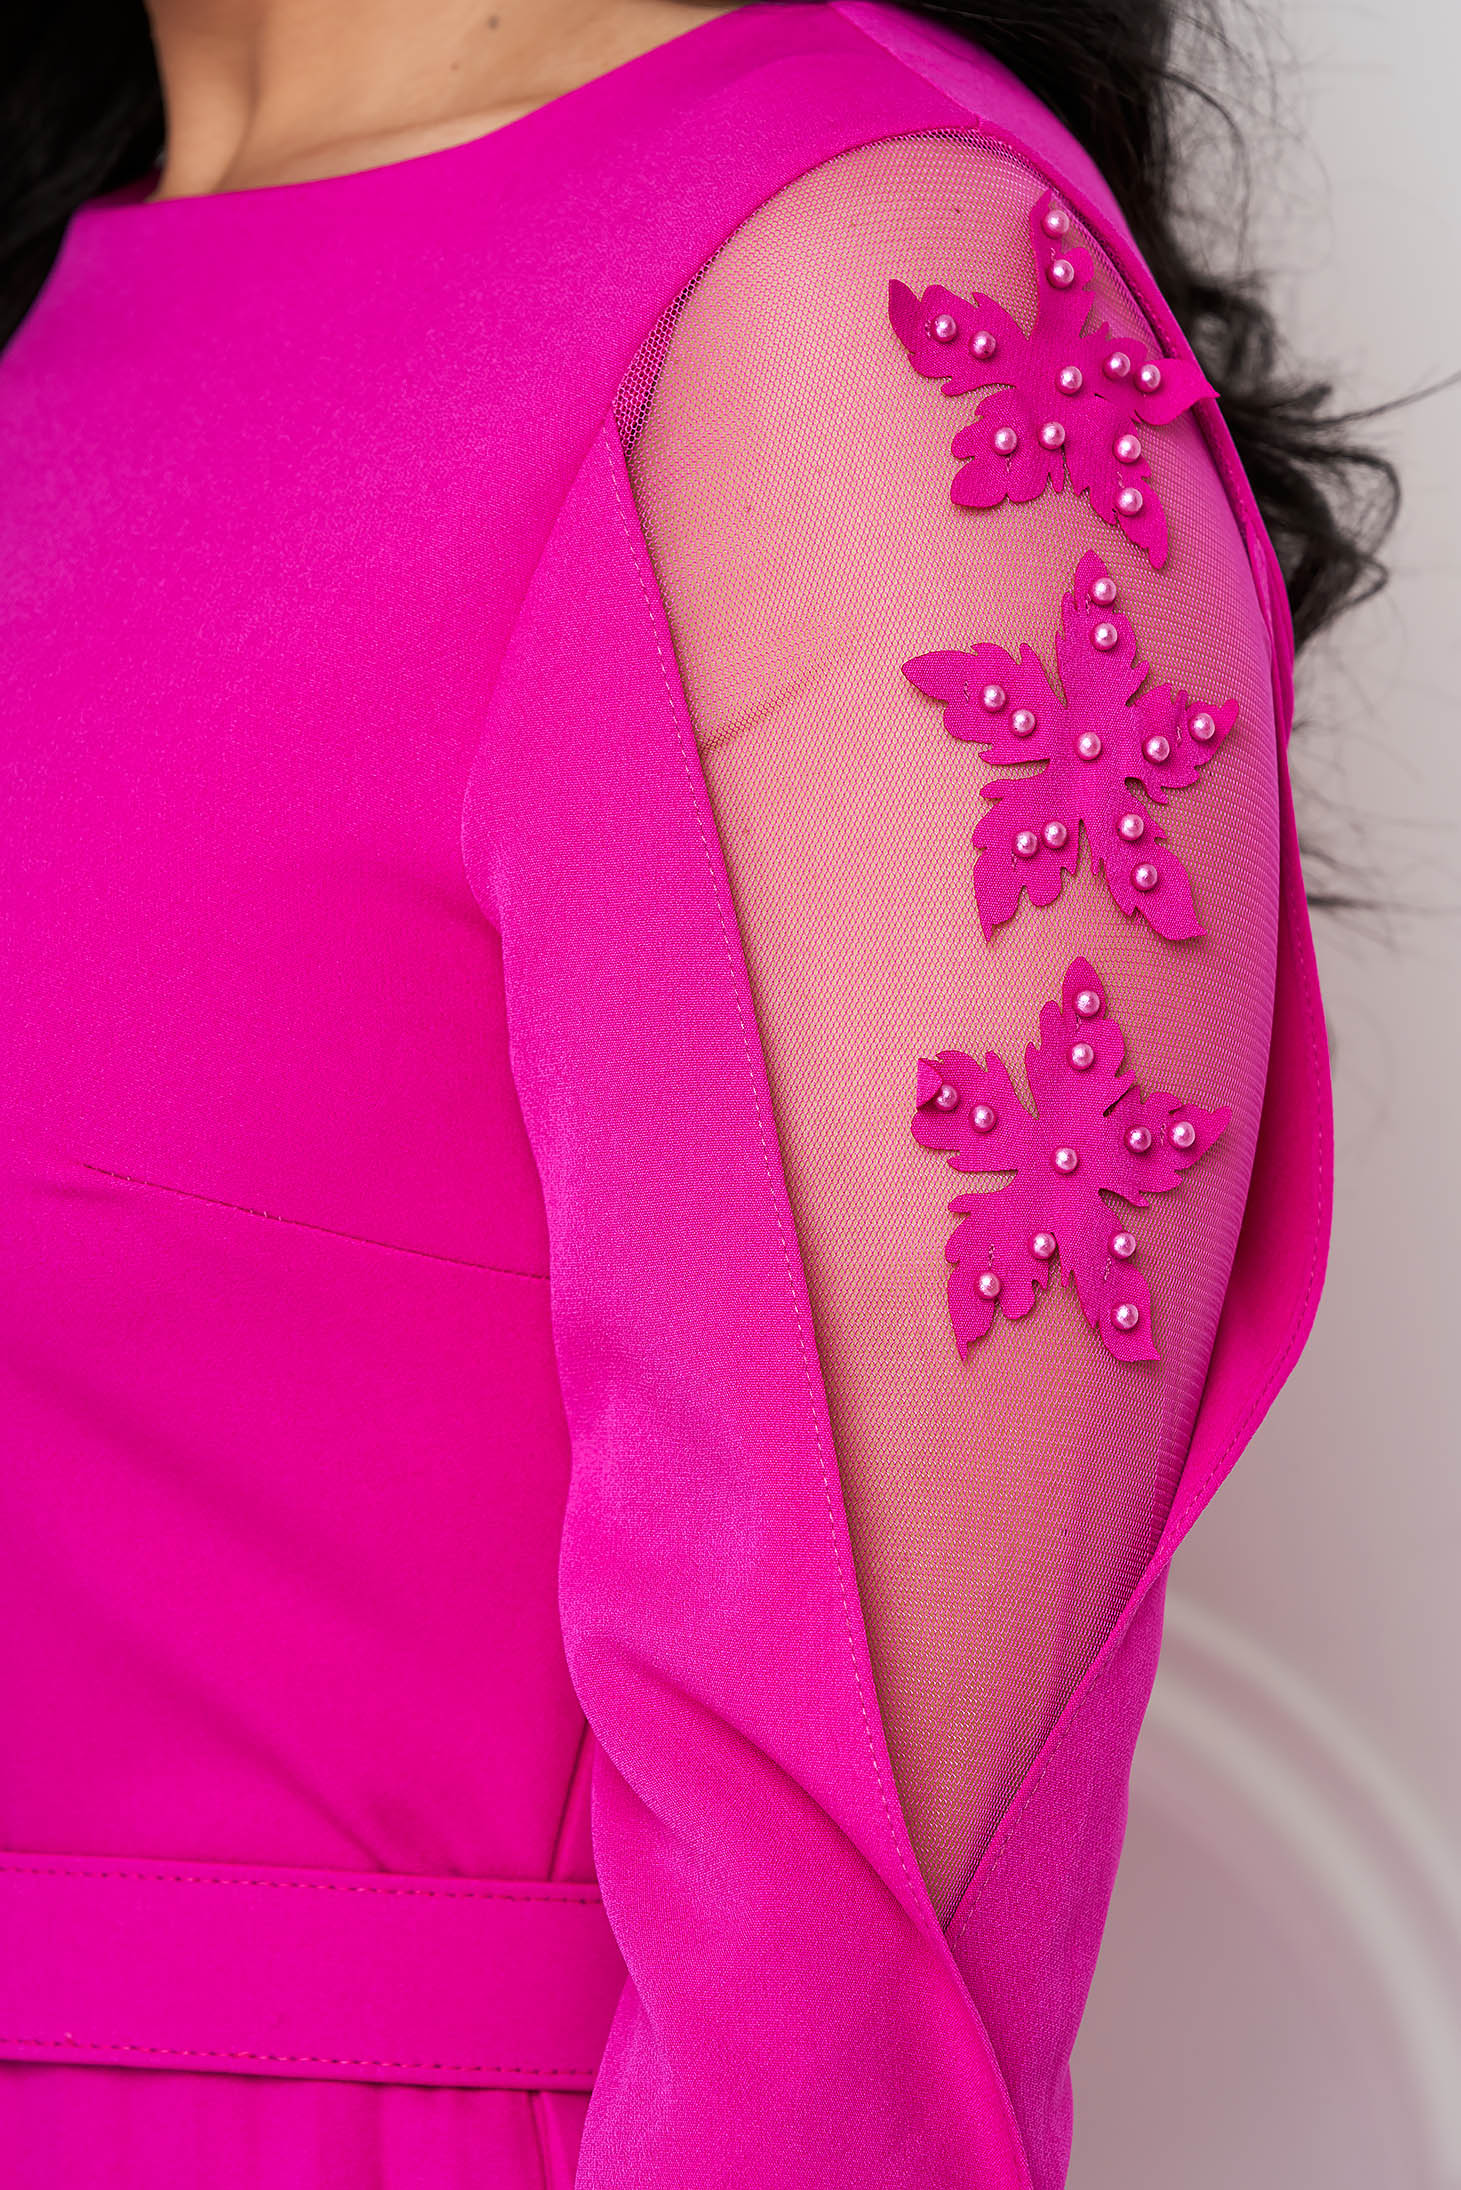 Rochie plisata din stofa usor elastica roz in clos cu flori in relief pe manecile decupate 5 - StarShinerS.ro